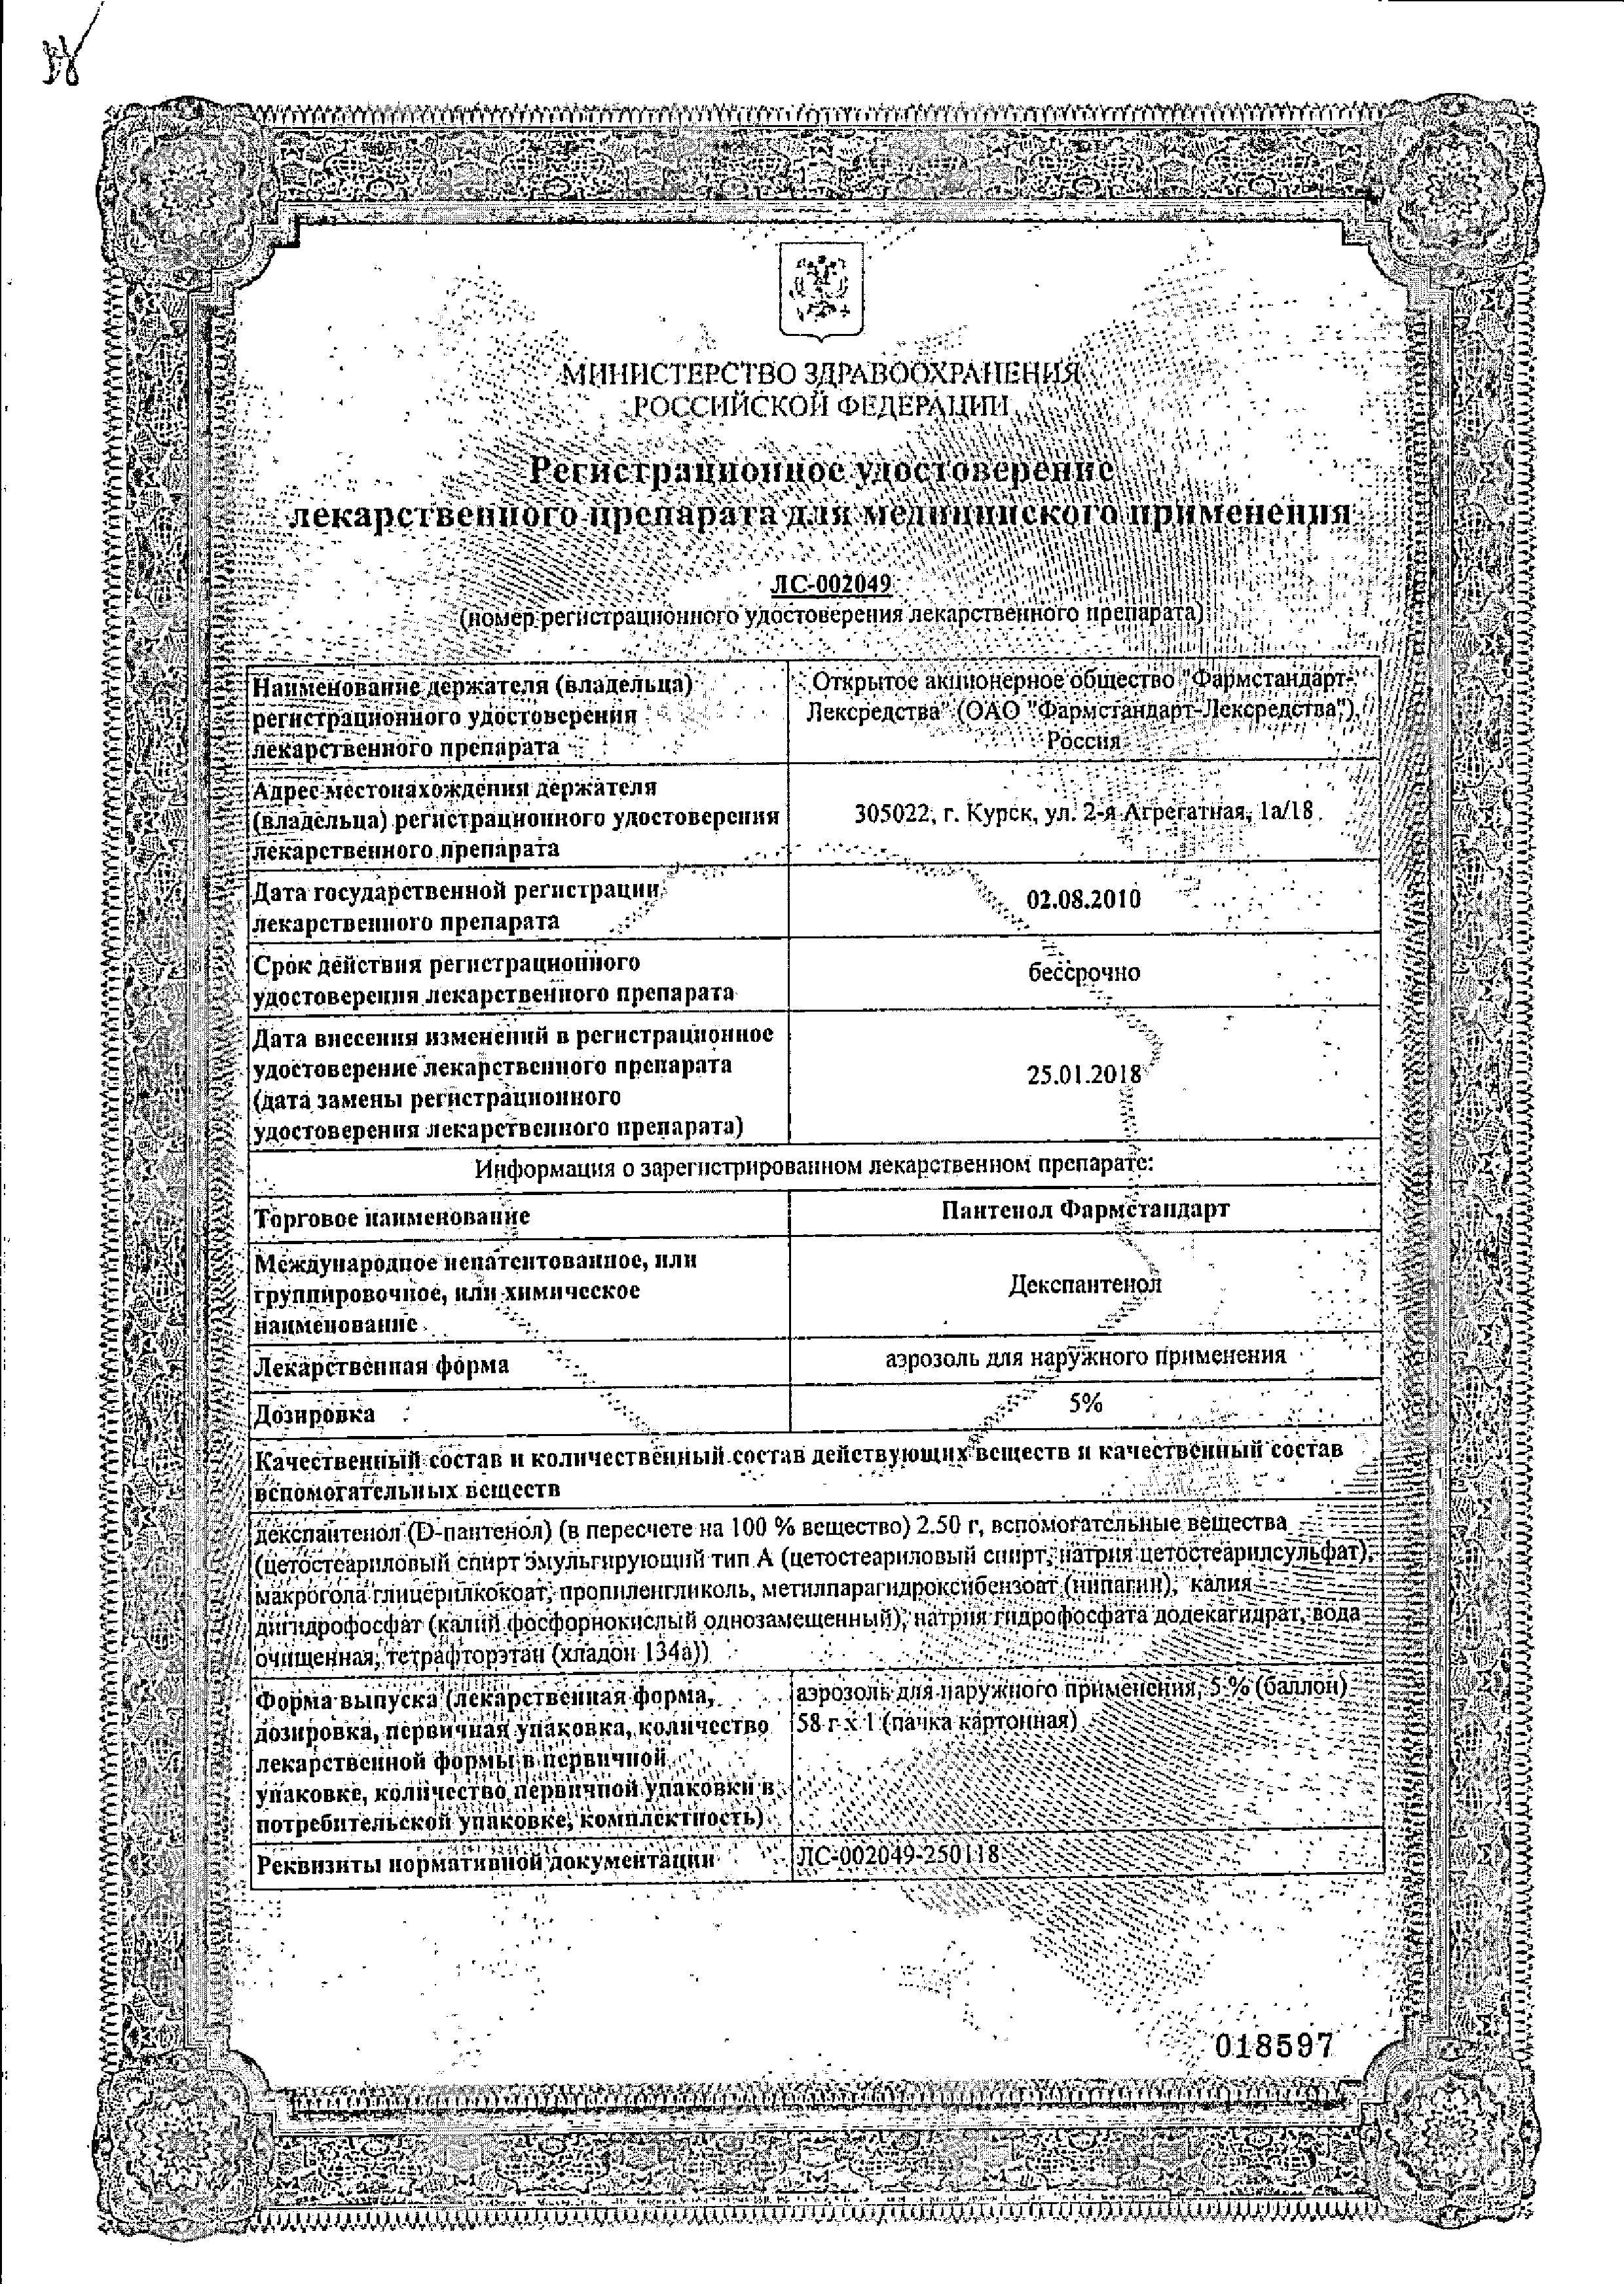 Пантенол Фармстандарт сертификат